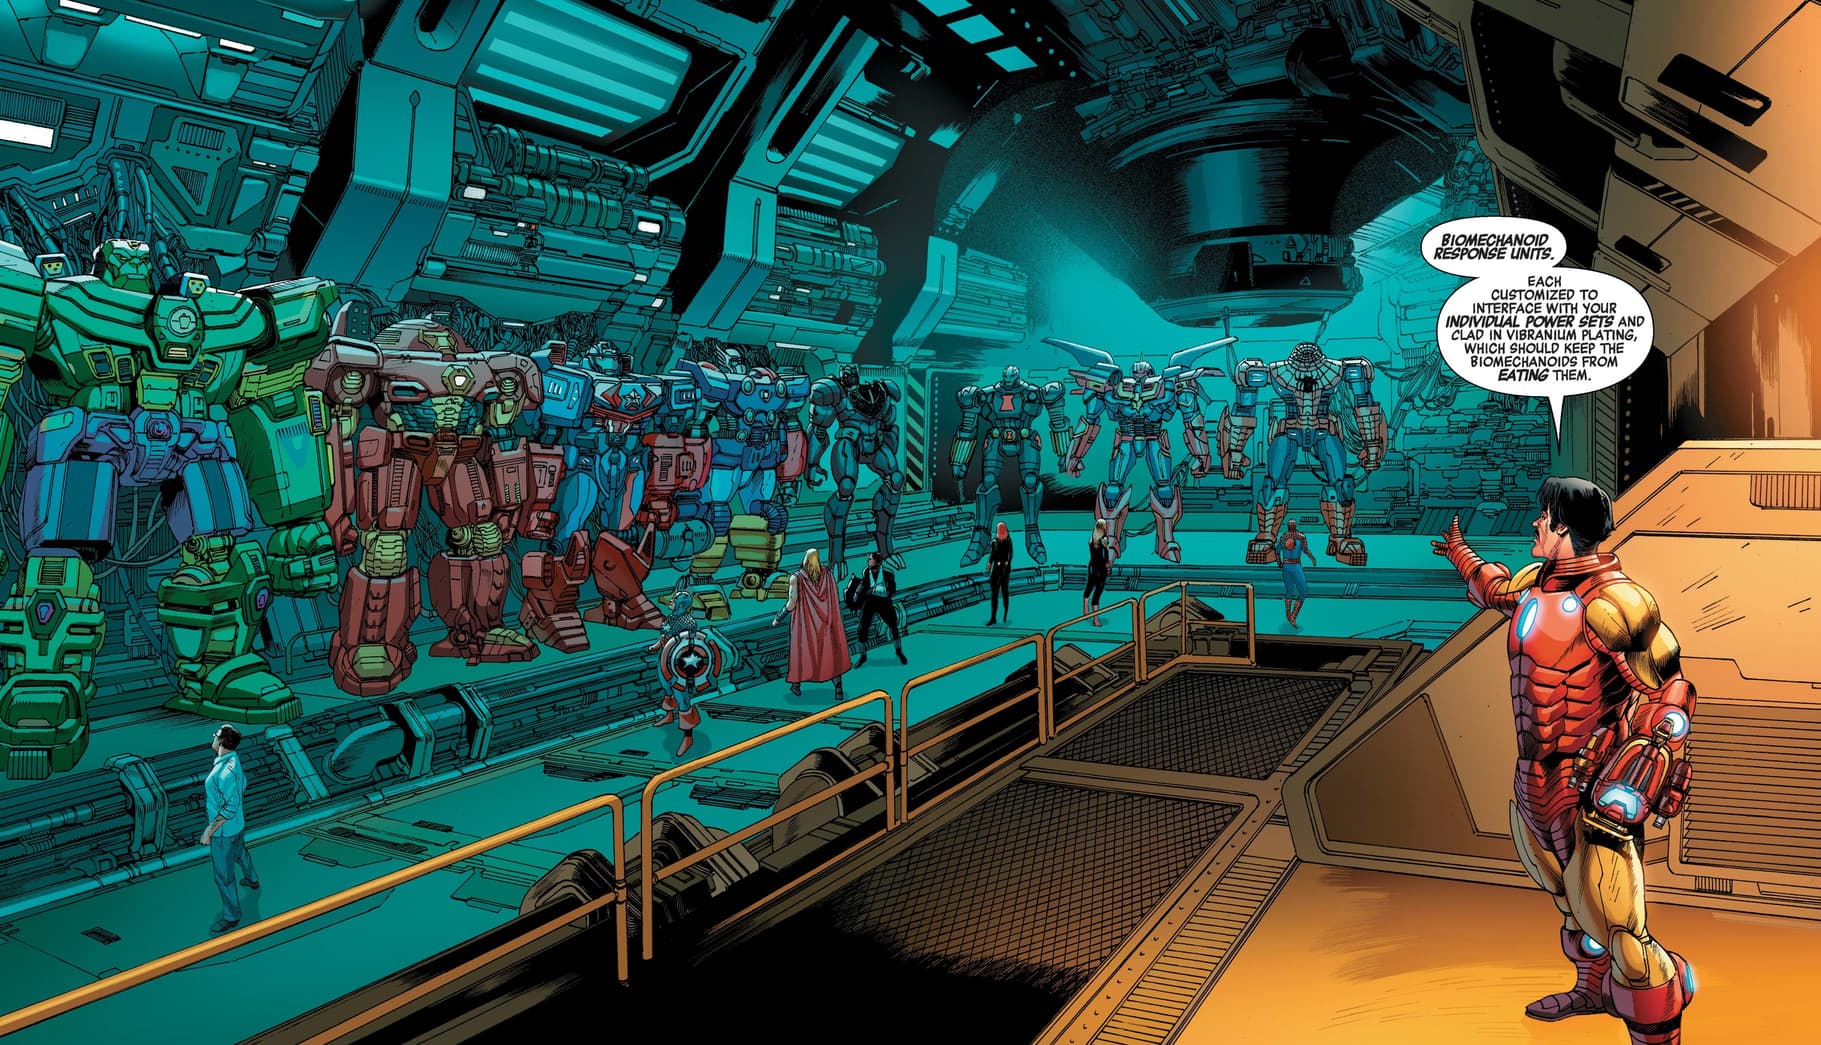 Tony Stark reveals the mech suit arsenal.